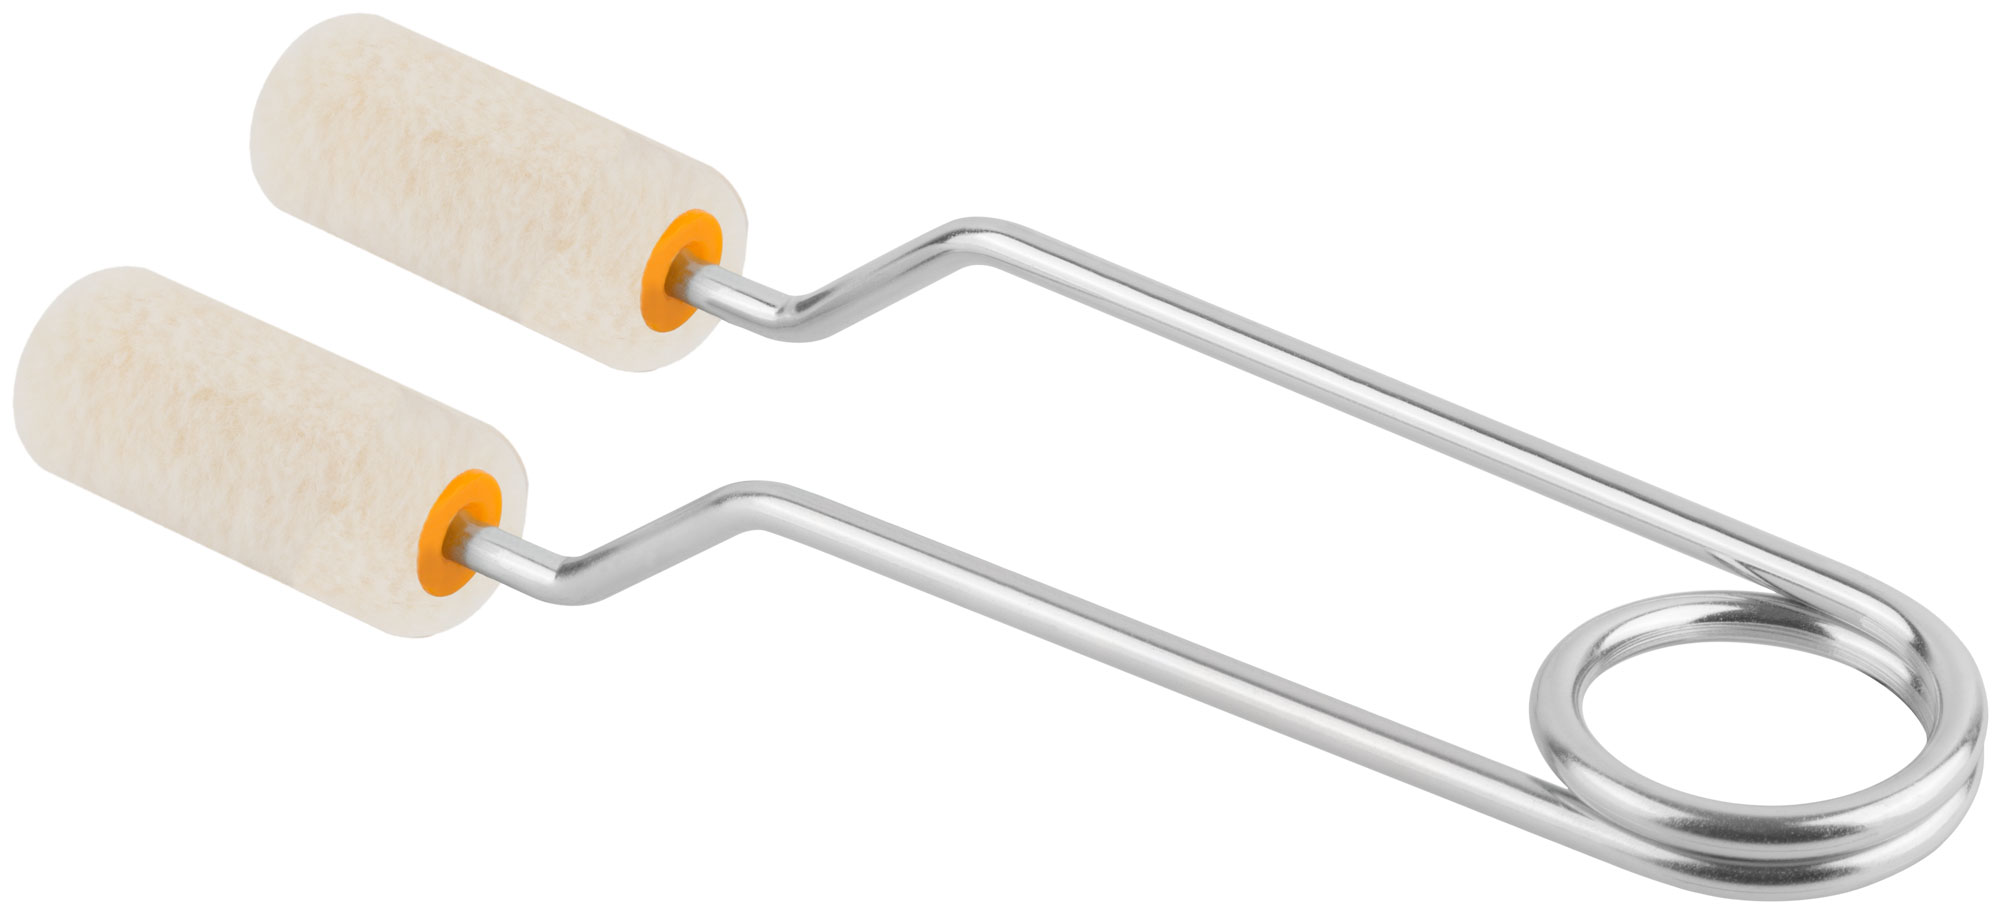 Ролик специальный для решеток, арматур, оград, ядро 15 мм,  100% велюр, ворс 5 мм, ручка д